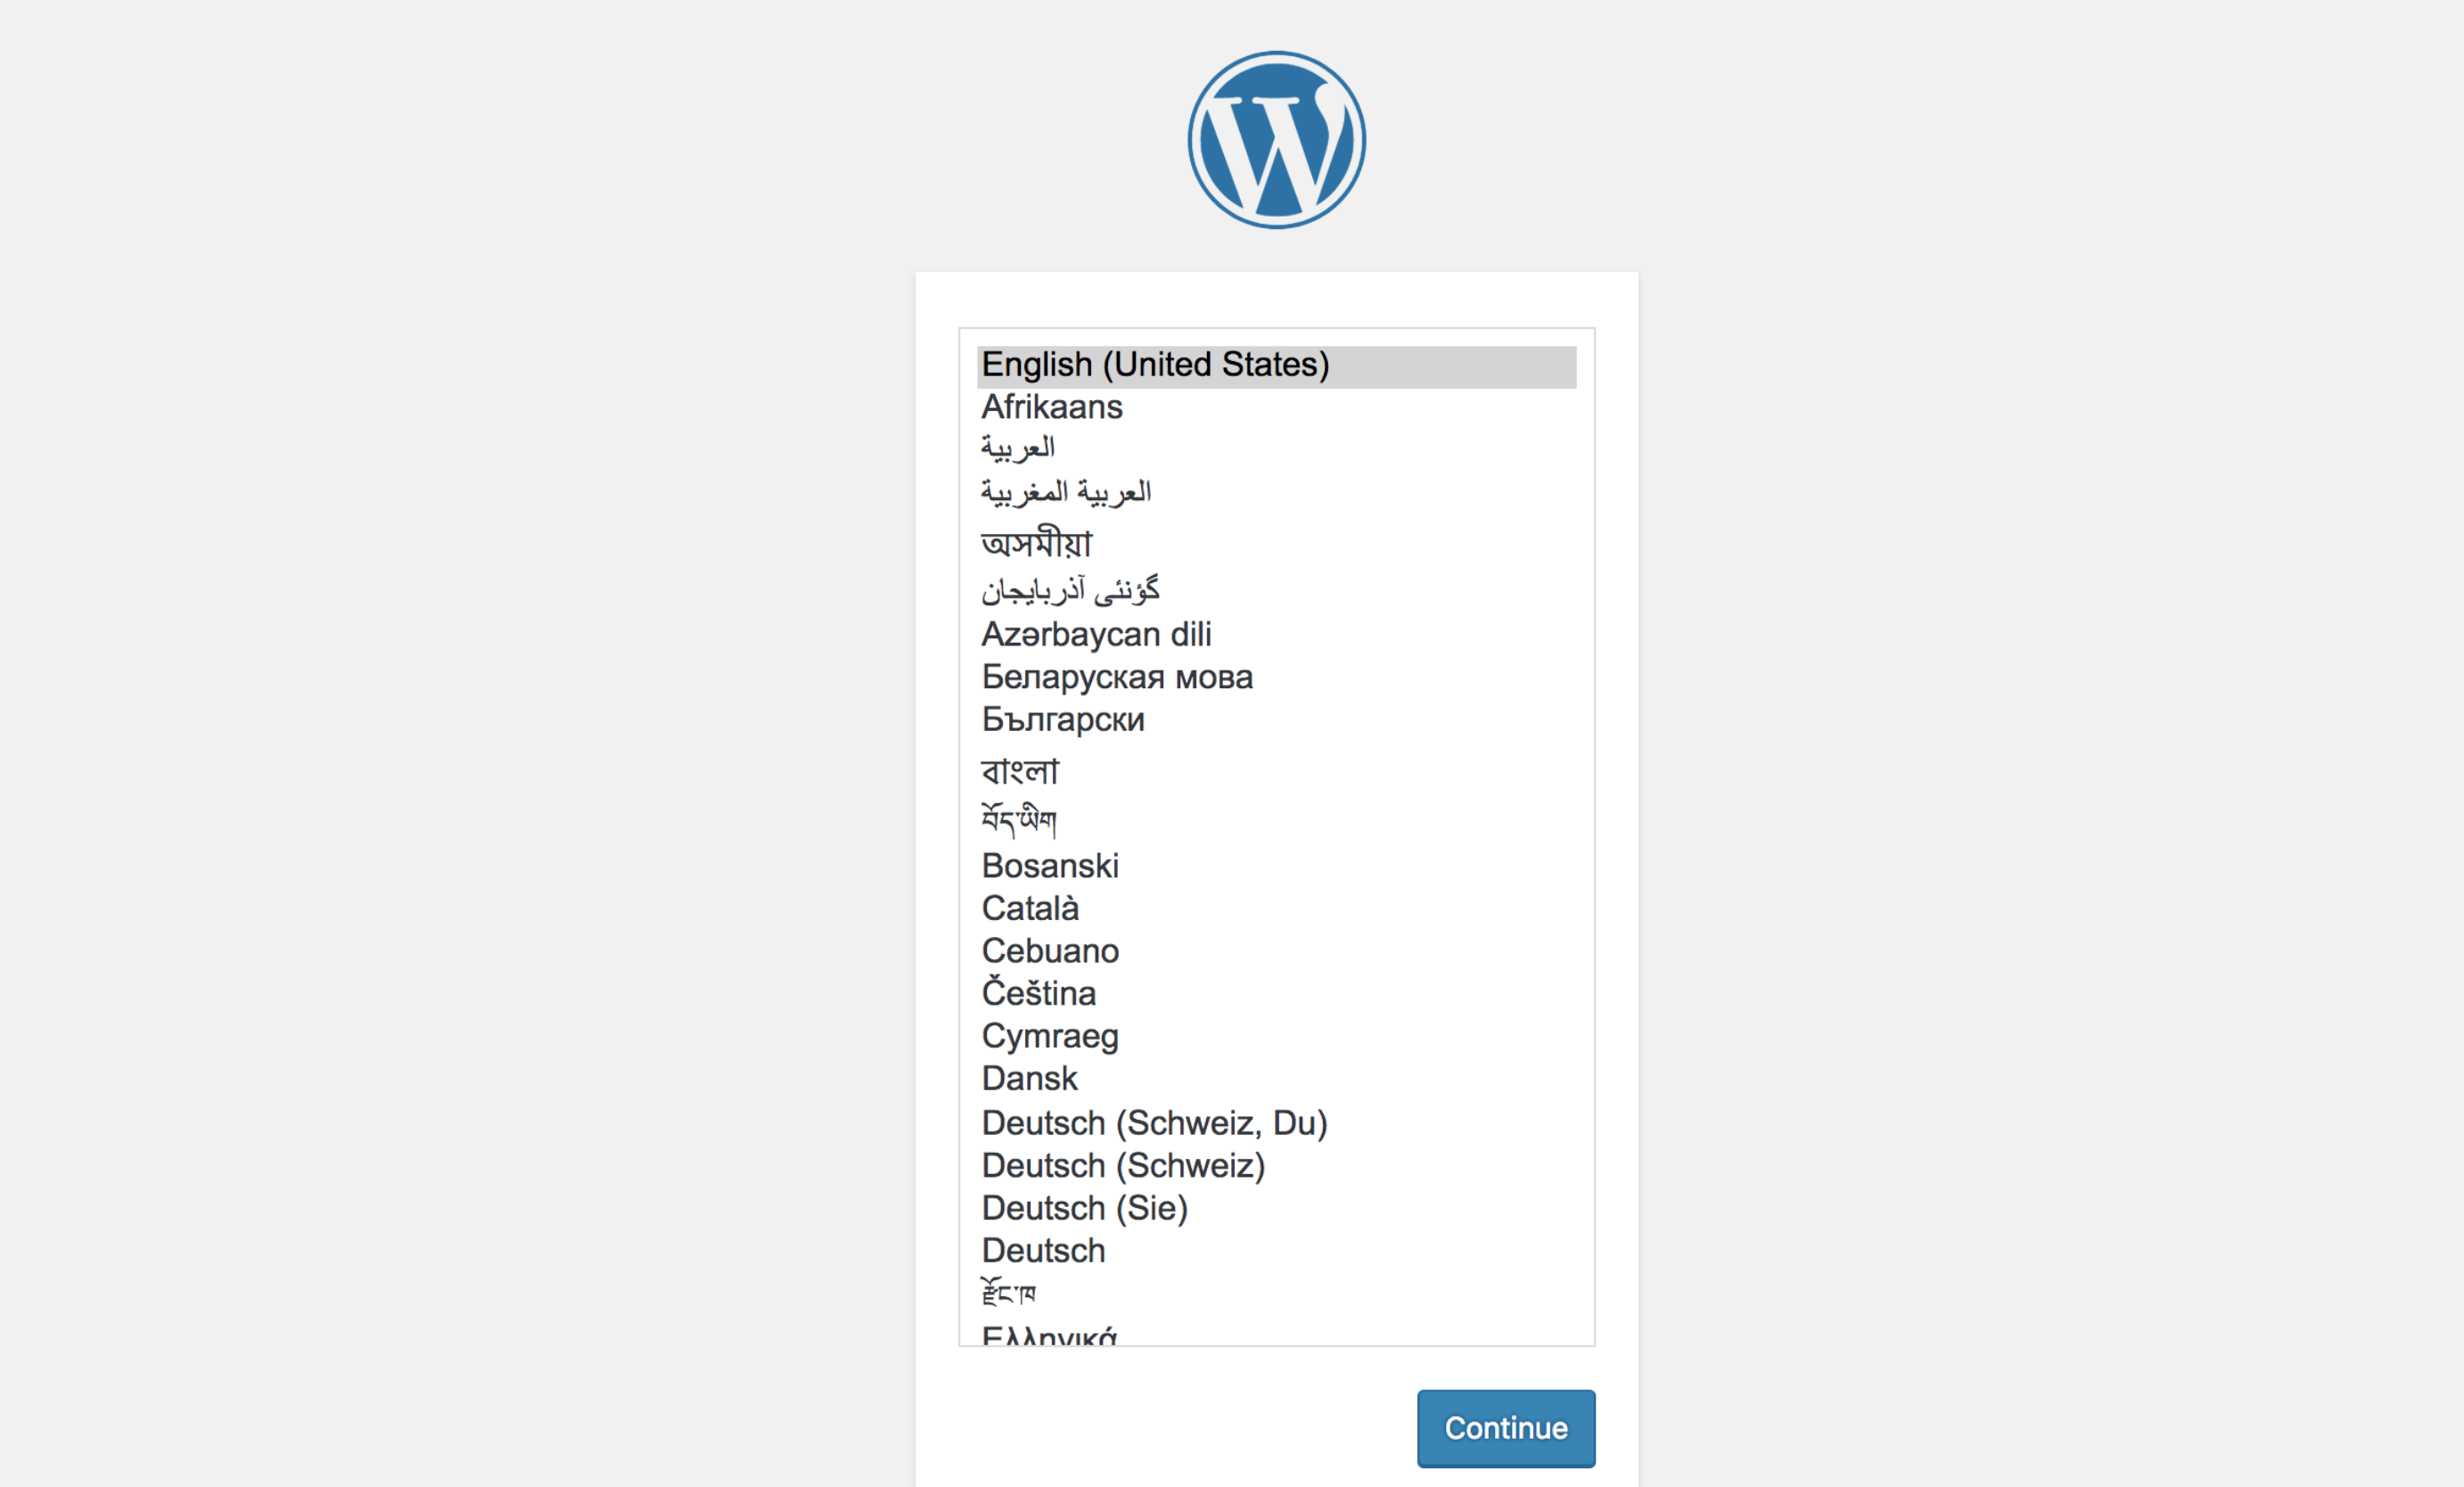 访问 Wordpress